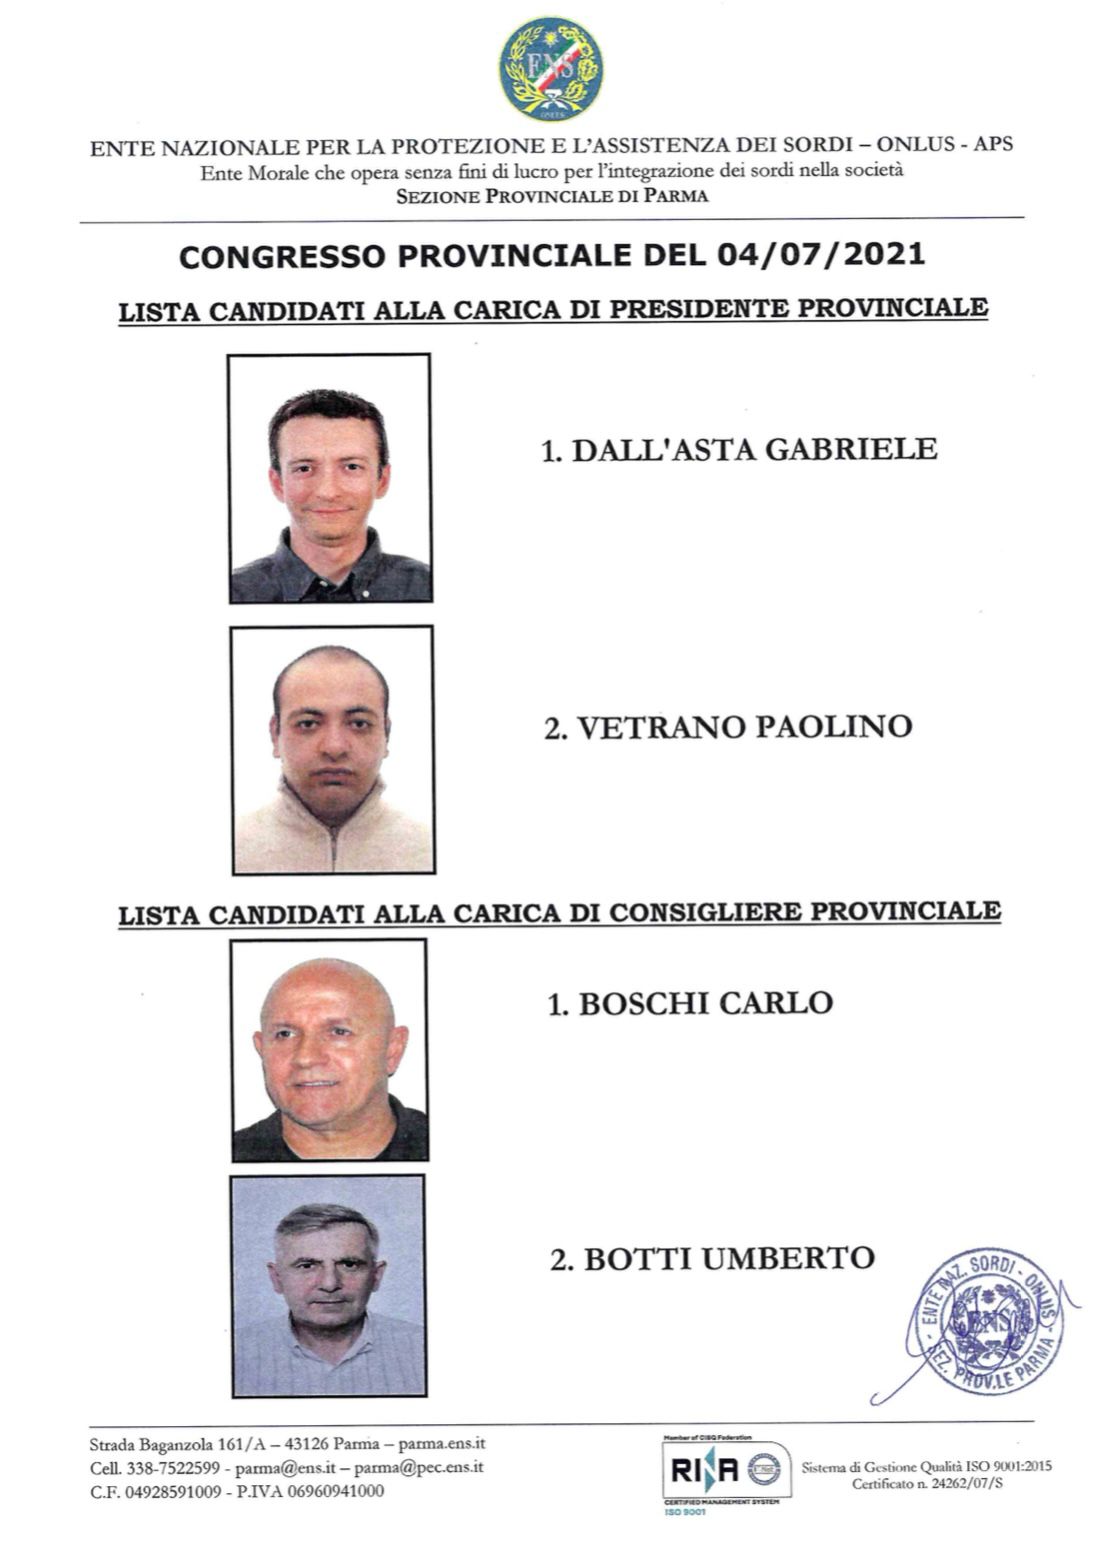 05 - Lista Candidati Congresso Provinciale Parma 04-07-2021.jpeg